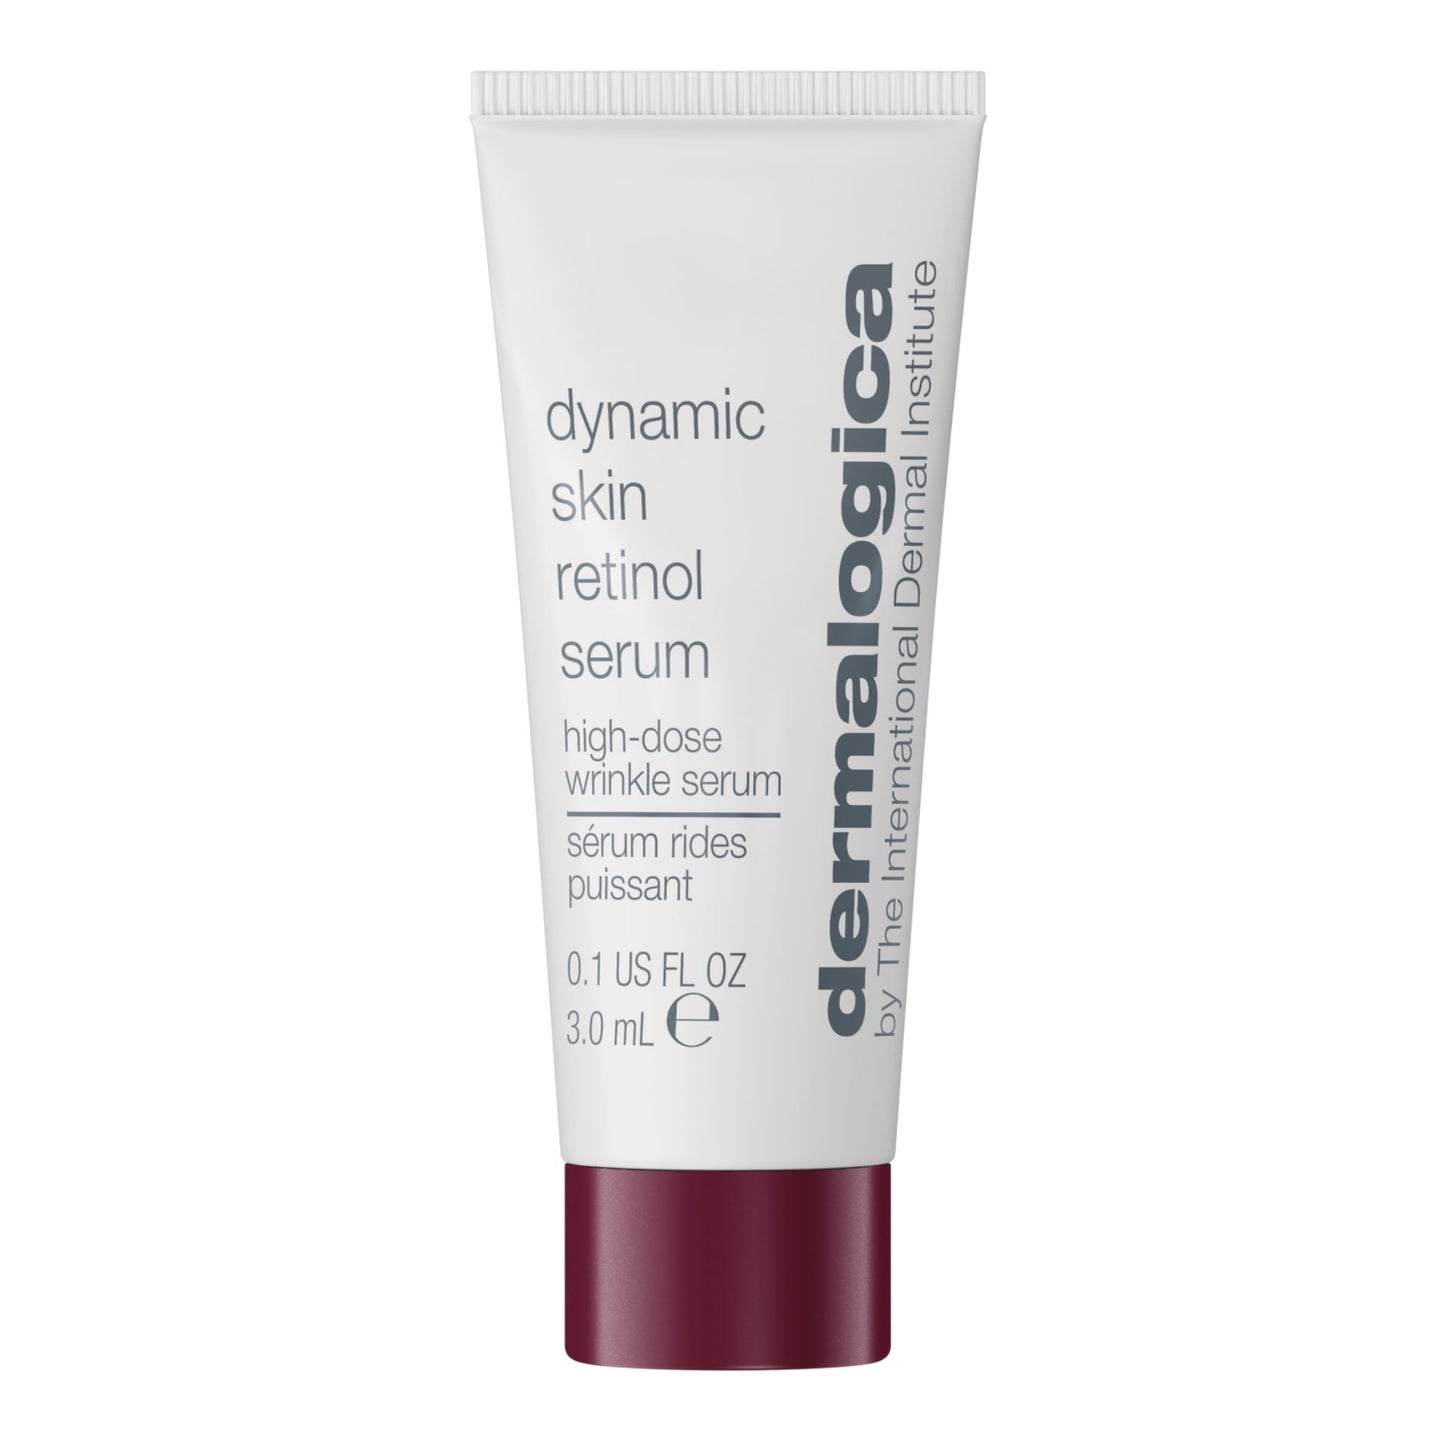 dynamic skin retinol serum - 3 mL